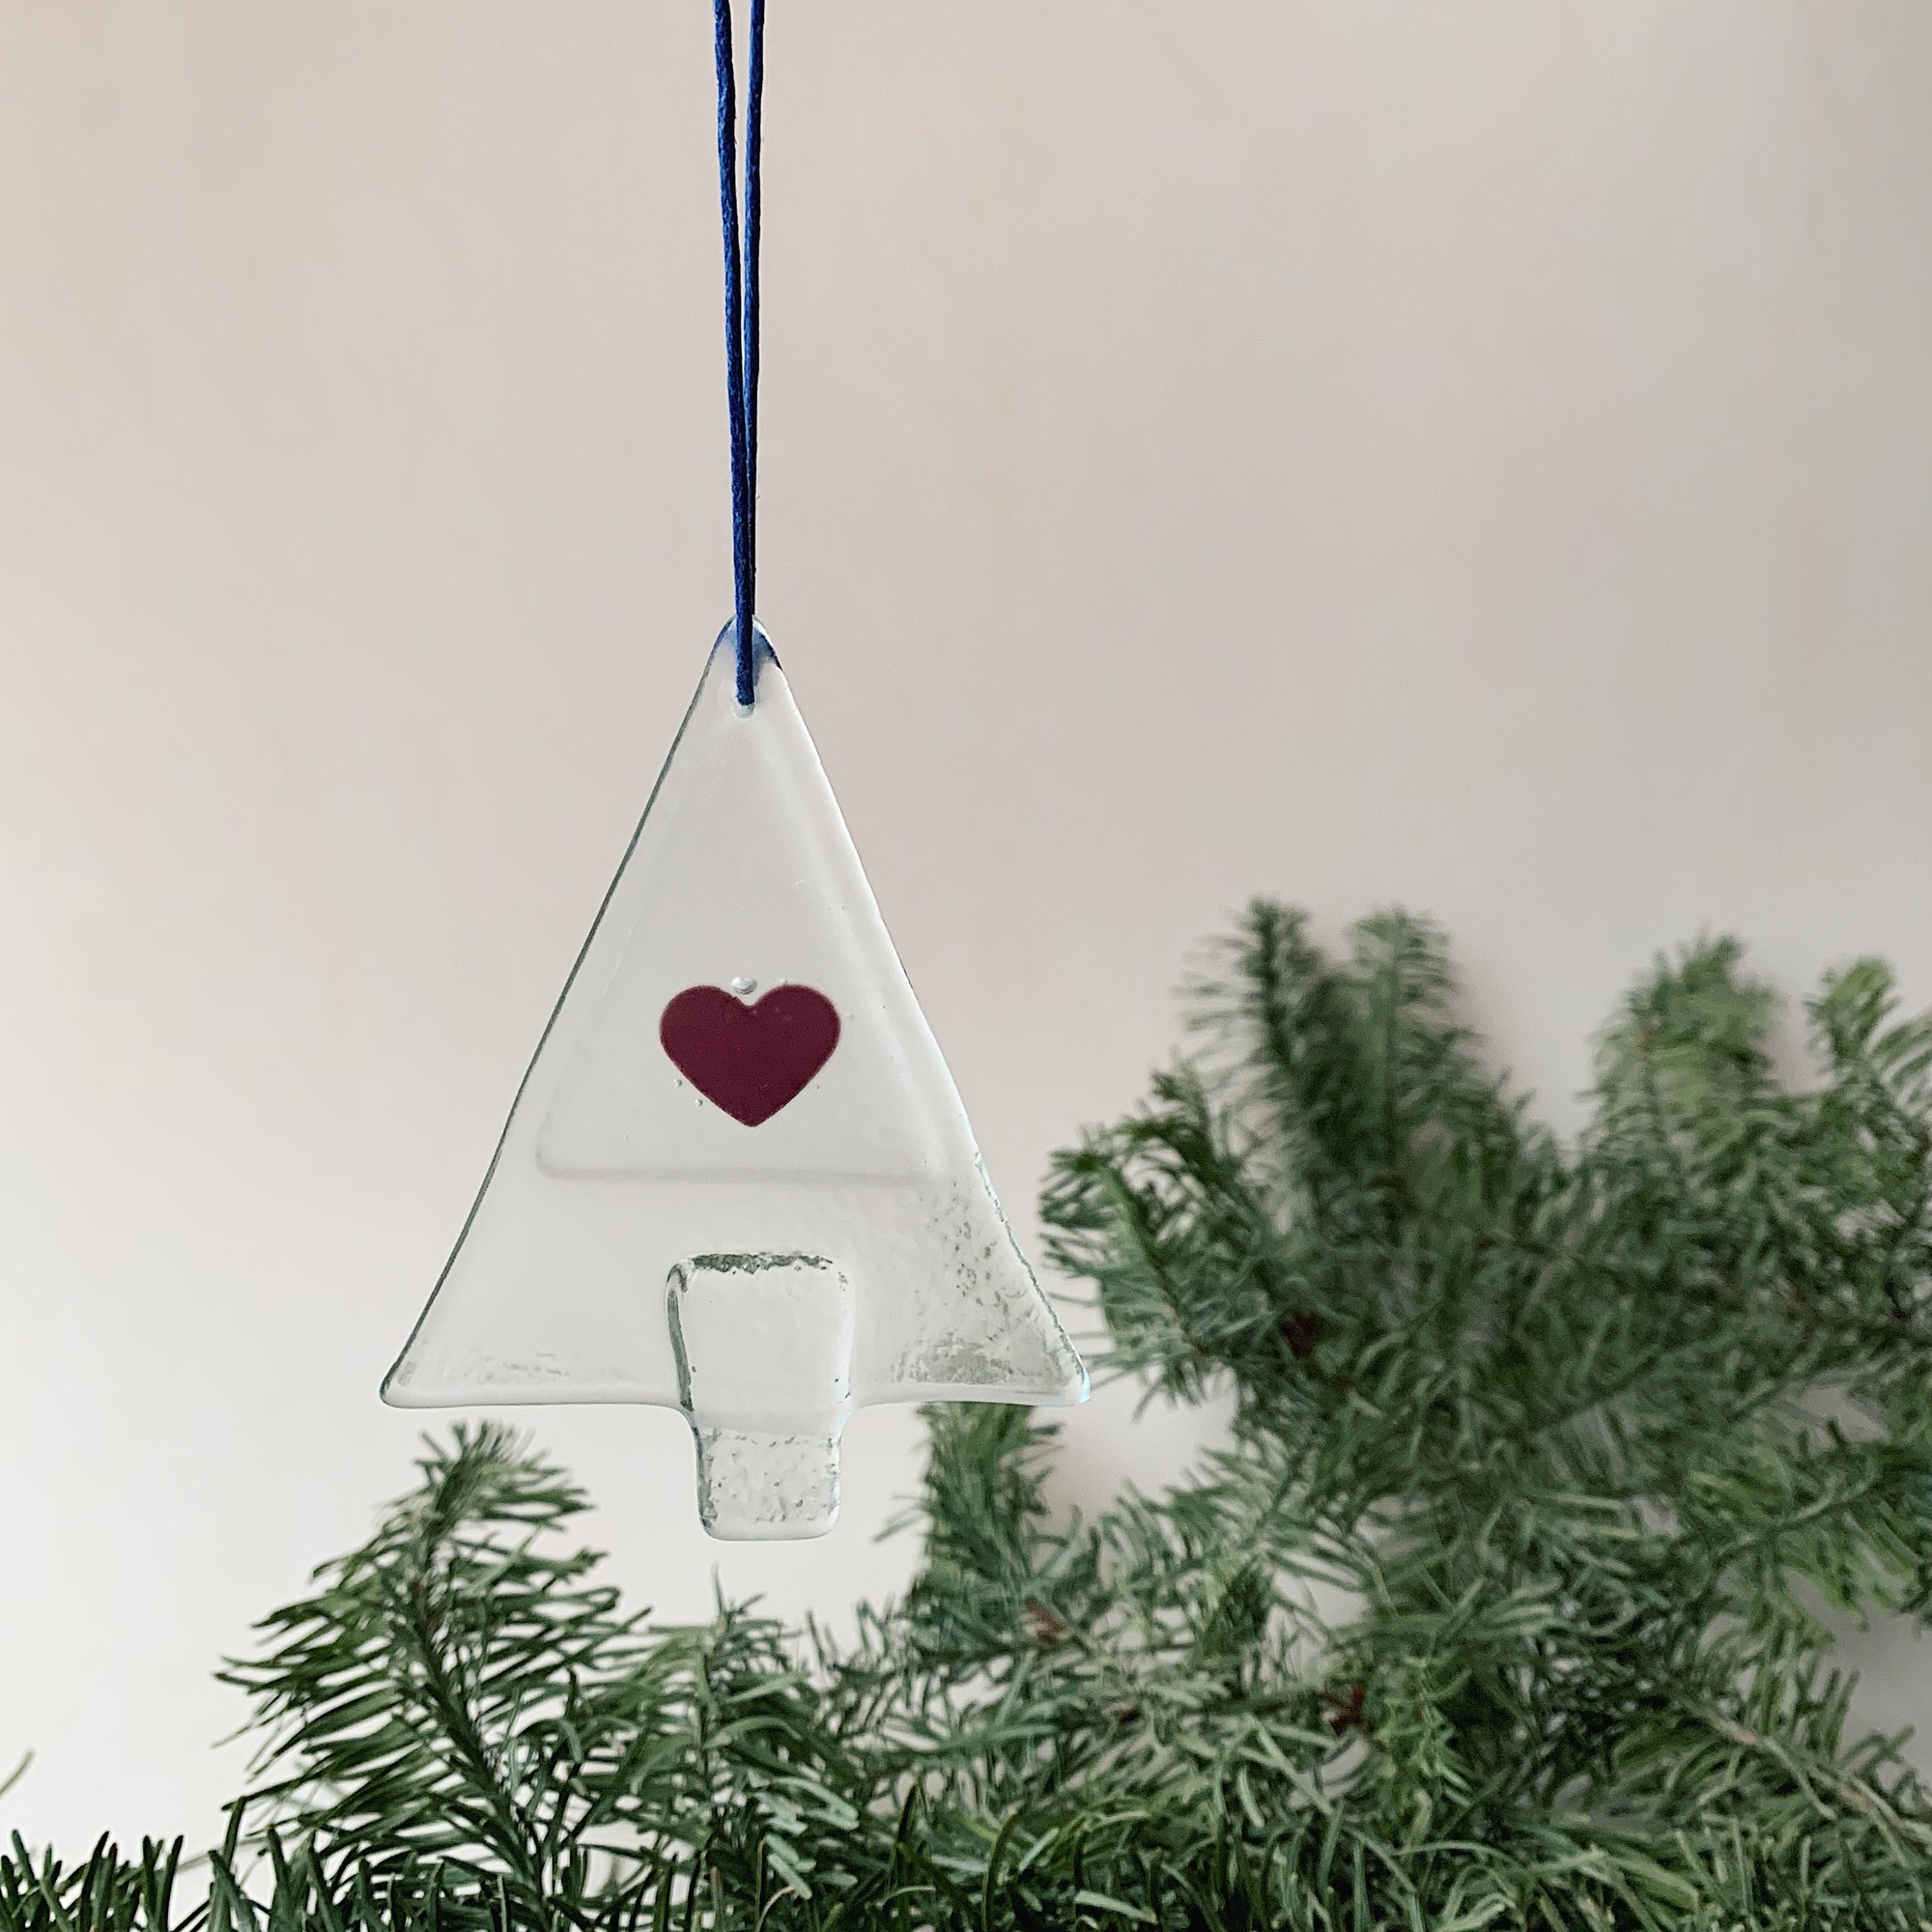 Glass decor Christmas tree, with a Heart